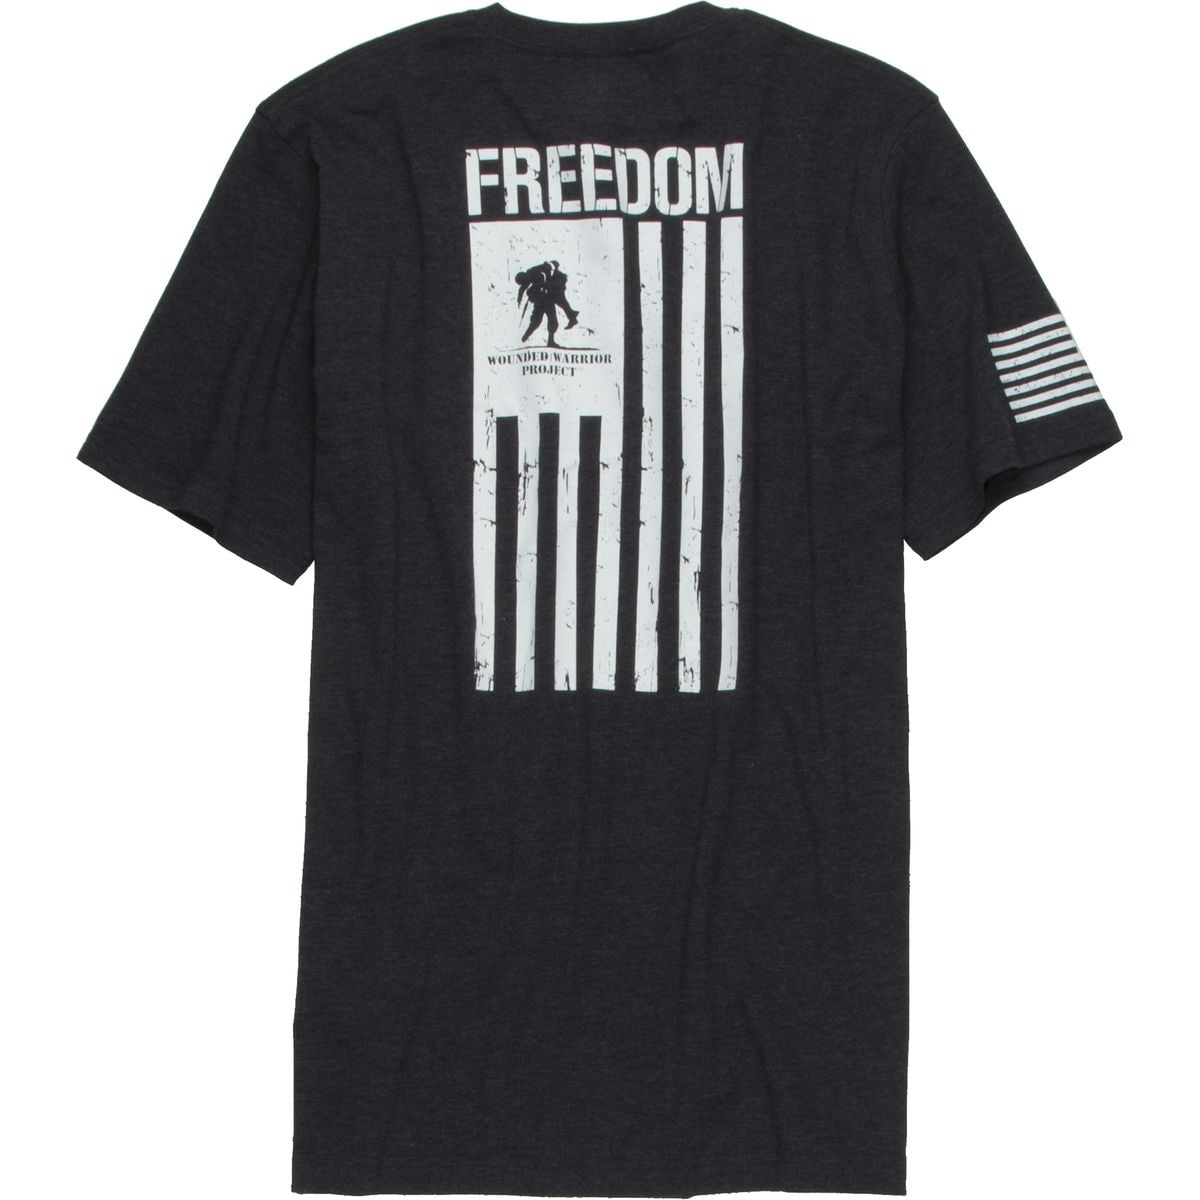 Under Armour WWP Freedom Flag T-Shirt - Short-Sleeve - Men's | eBay